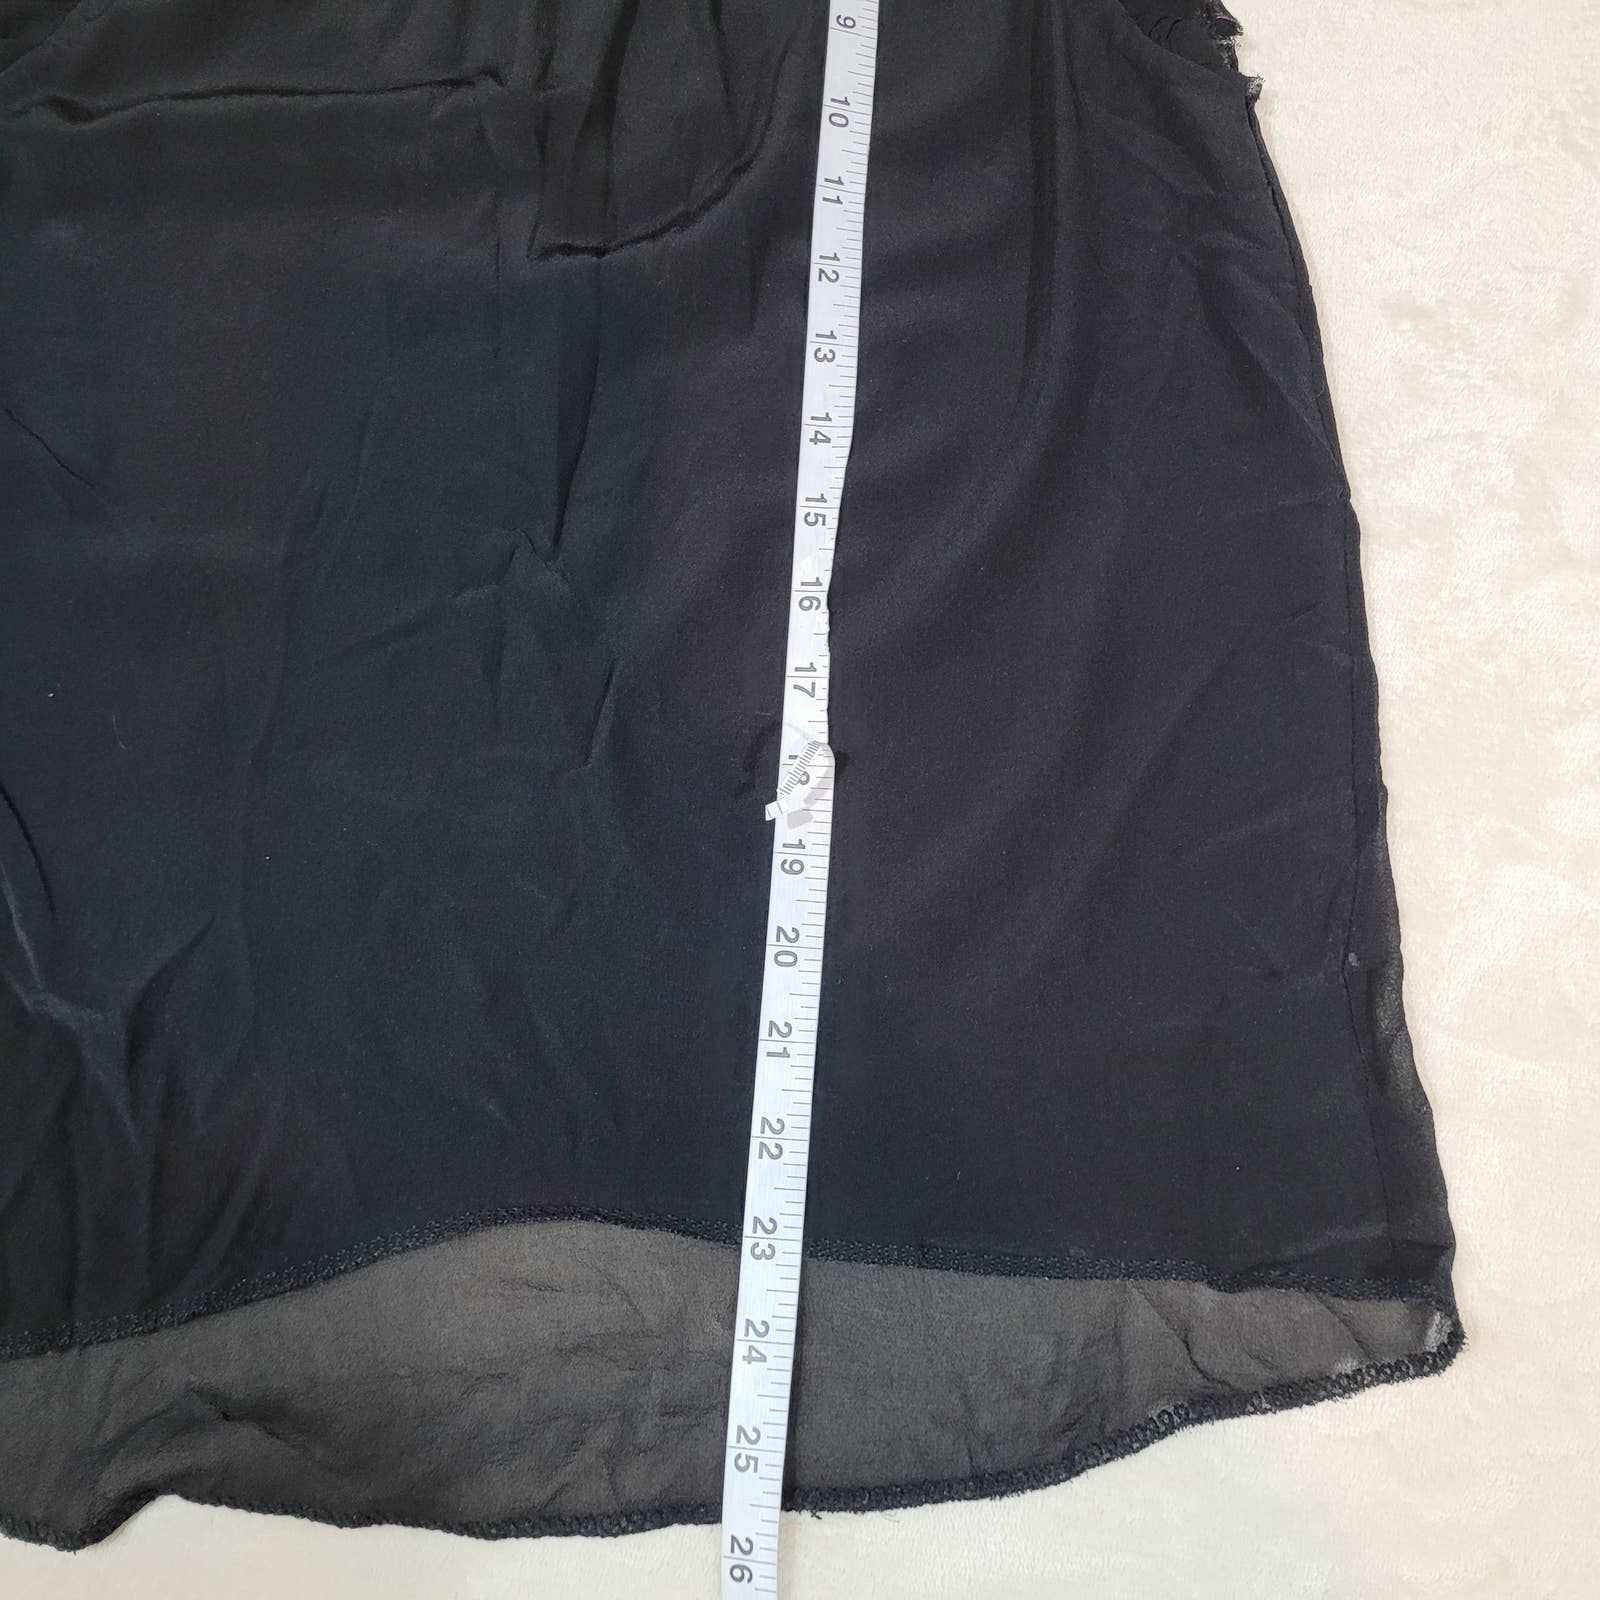 Aritzia Wilfred Black Silk Blouse with Ruffled Shoulders - Size Extra SmallMarkita's ClosetAritzia